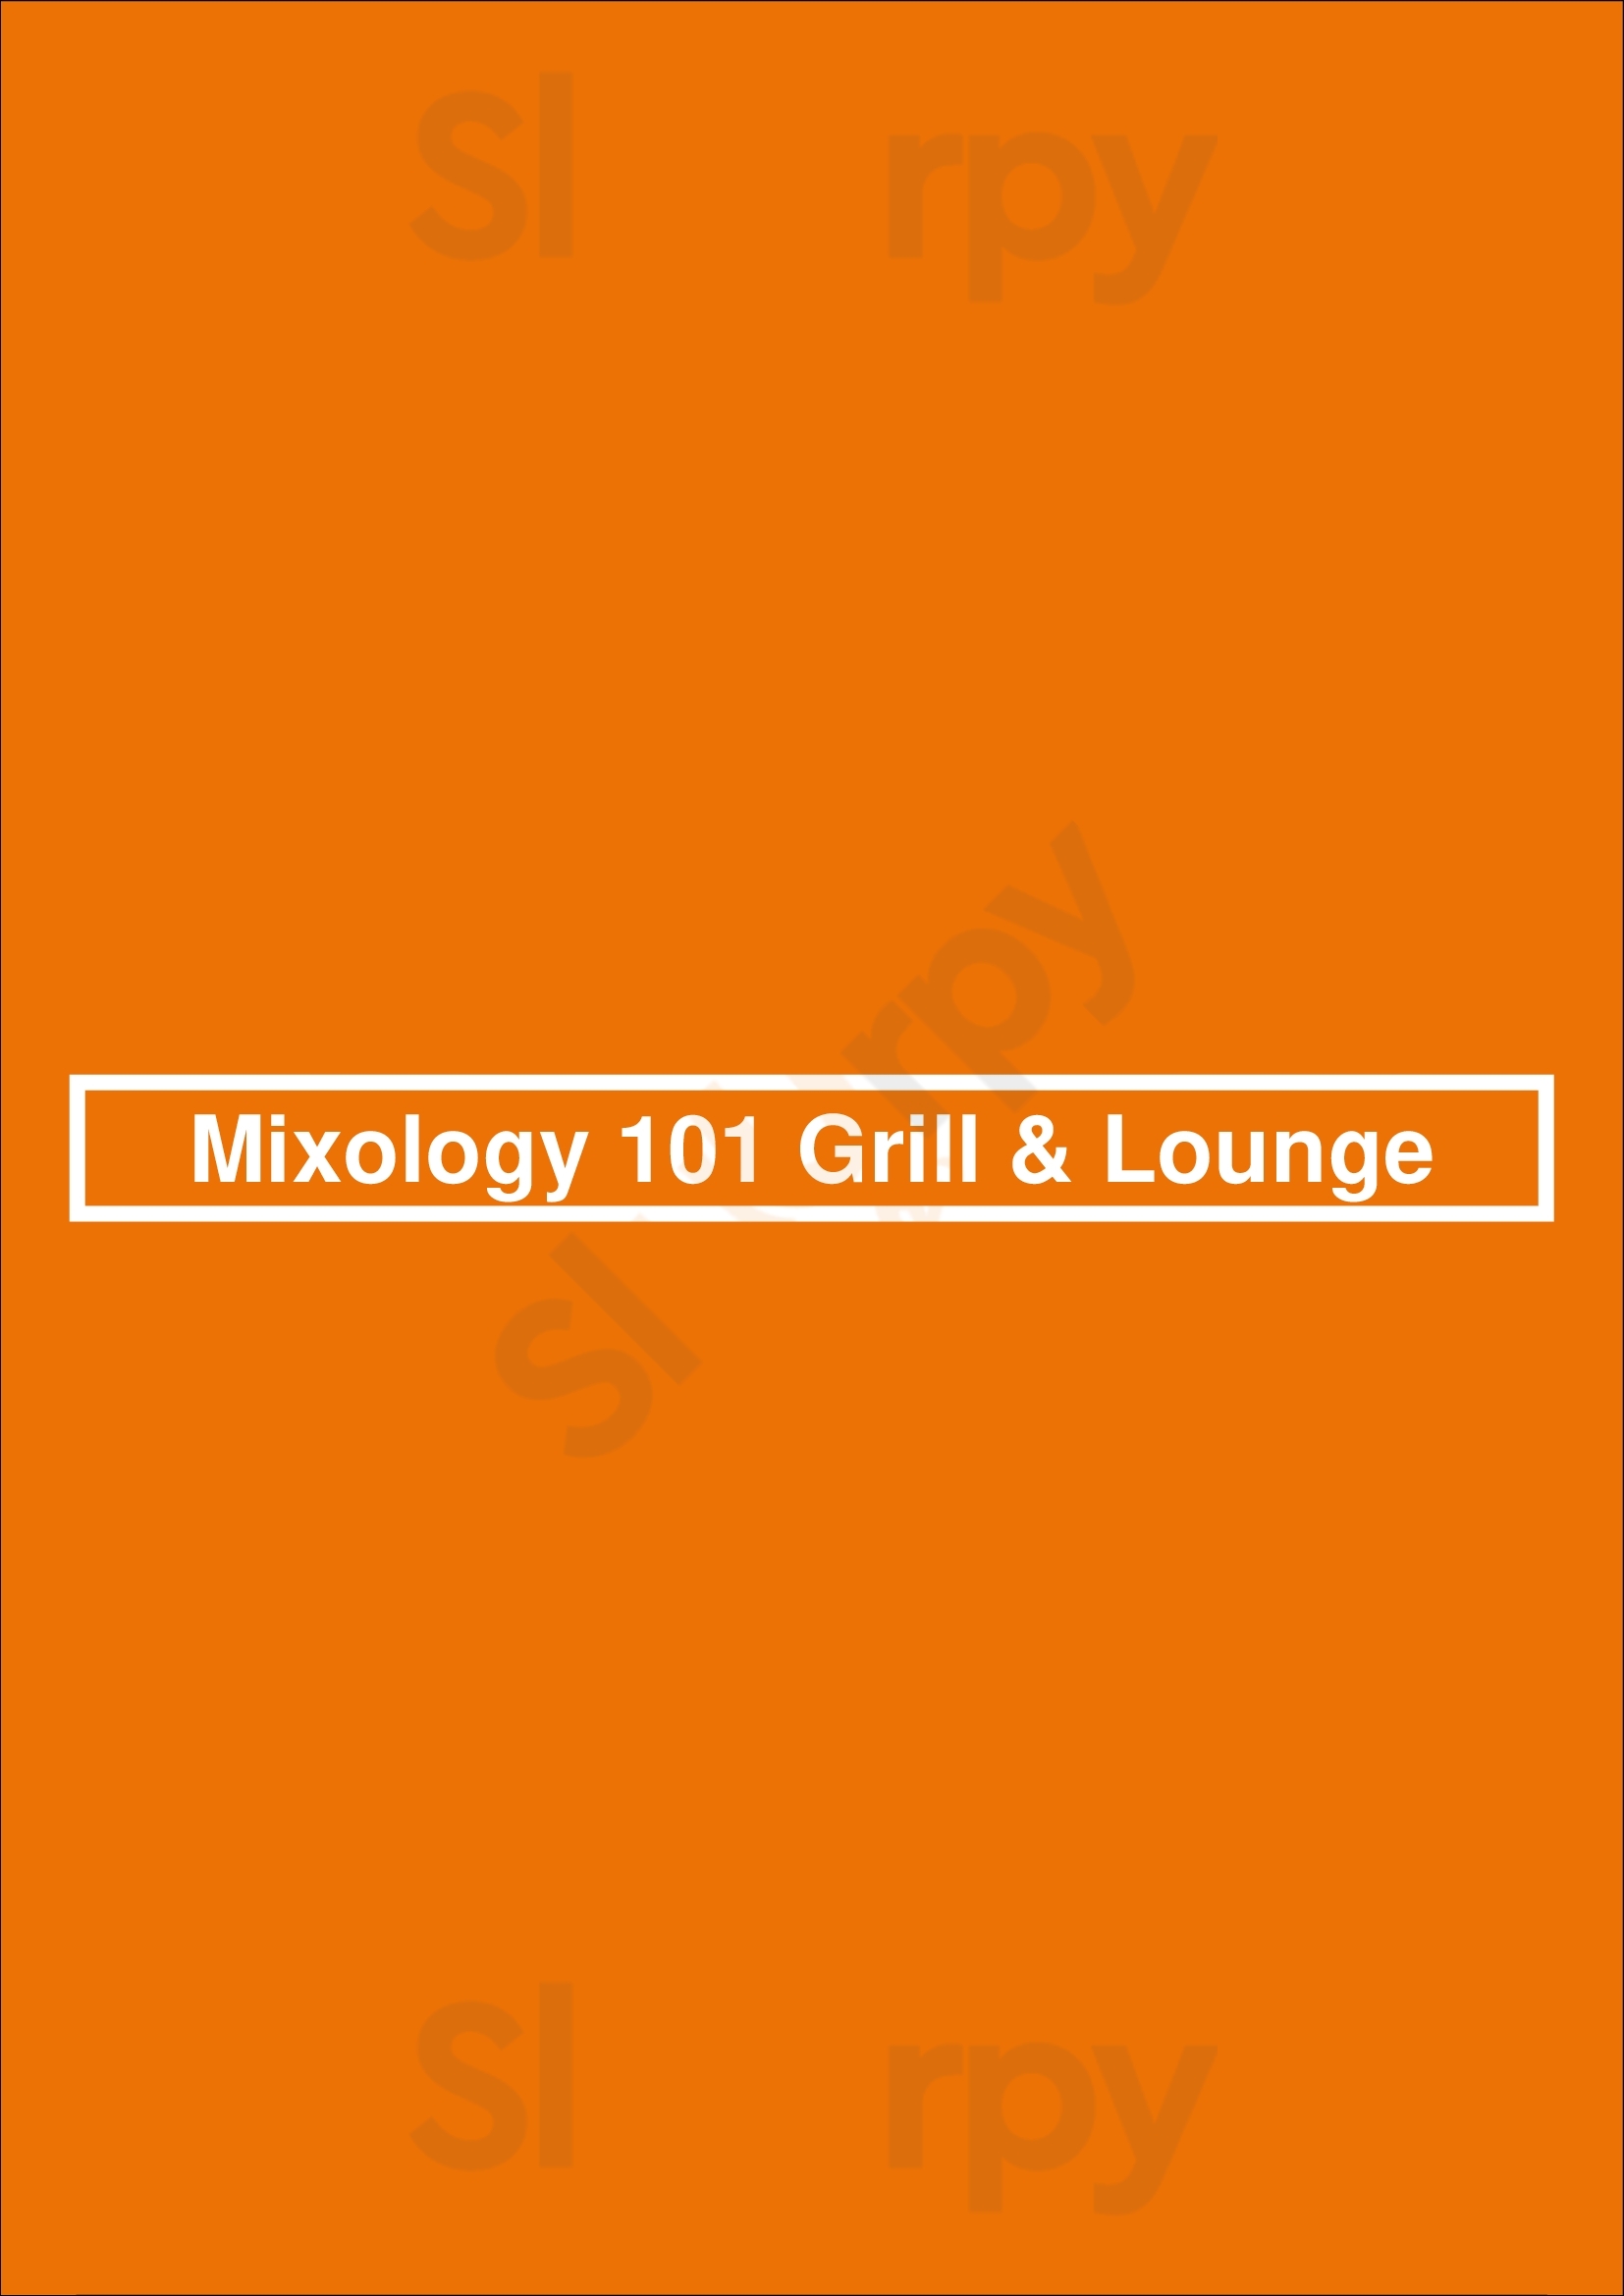 Mixology 101 Grill & Lounge Los Angeles Menu - 1